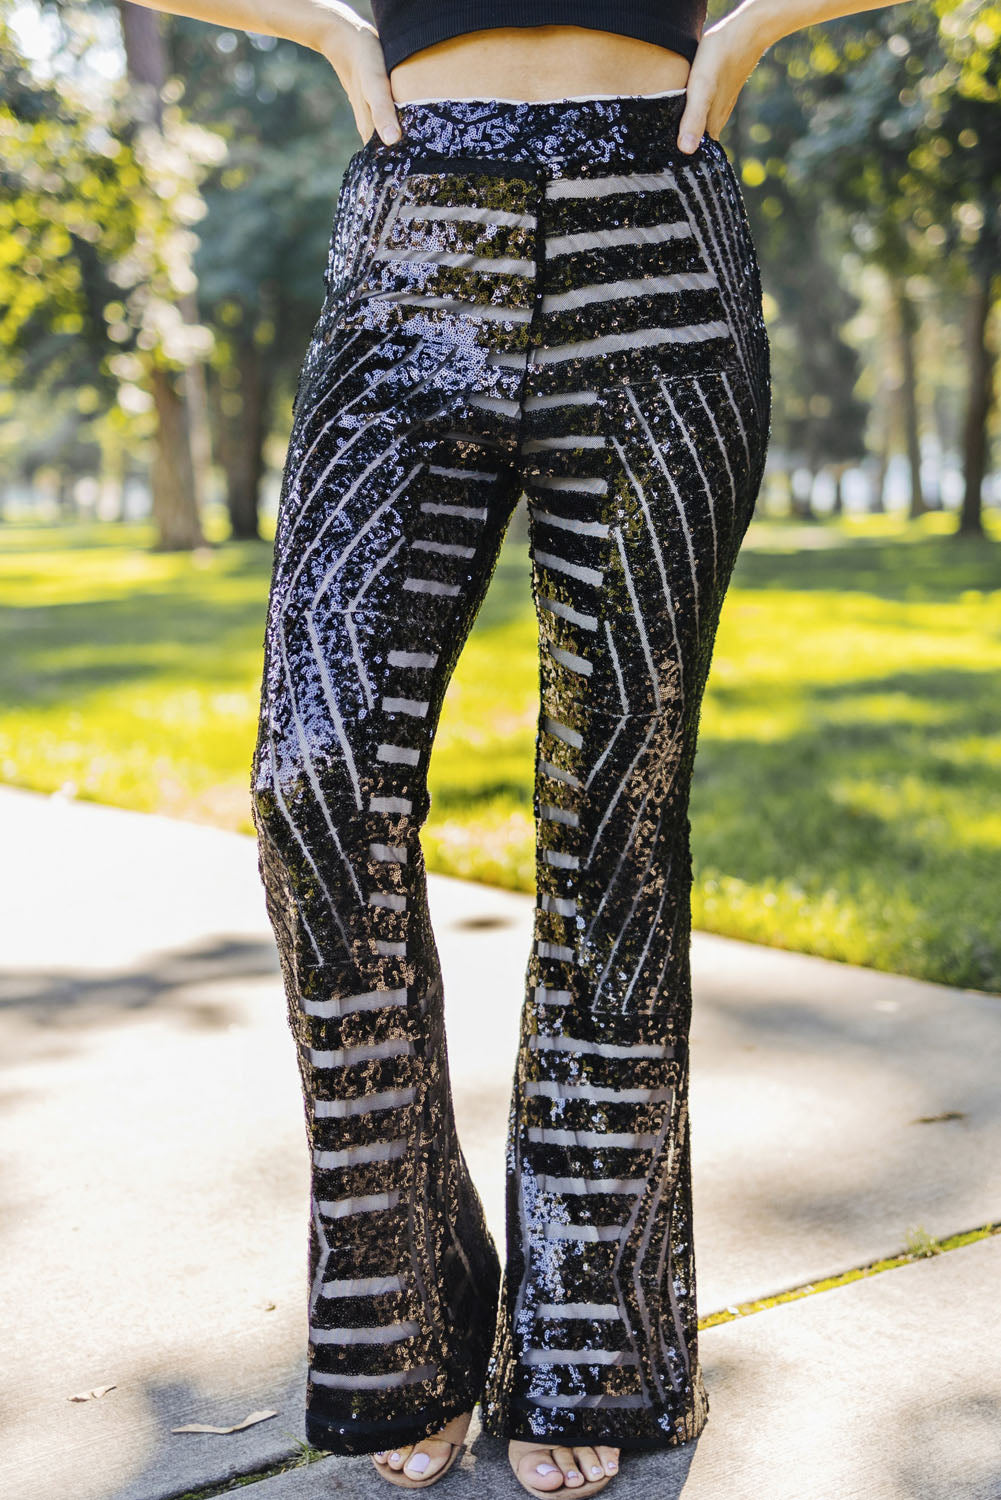 Black Sequins Striped High Waist Flared Pants